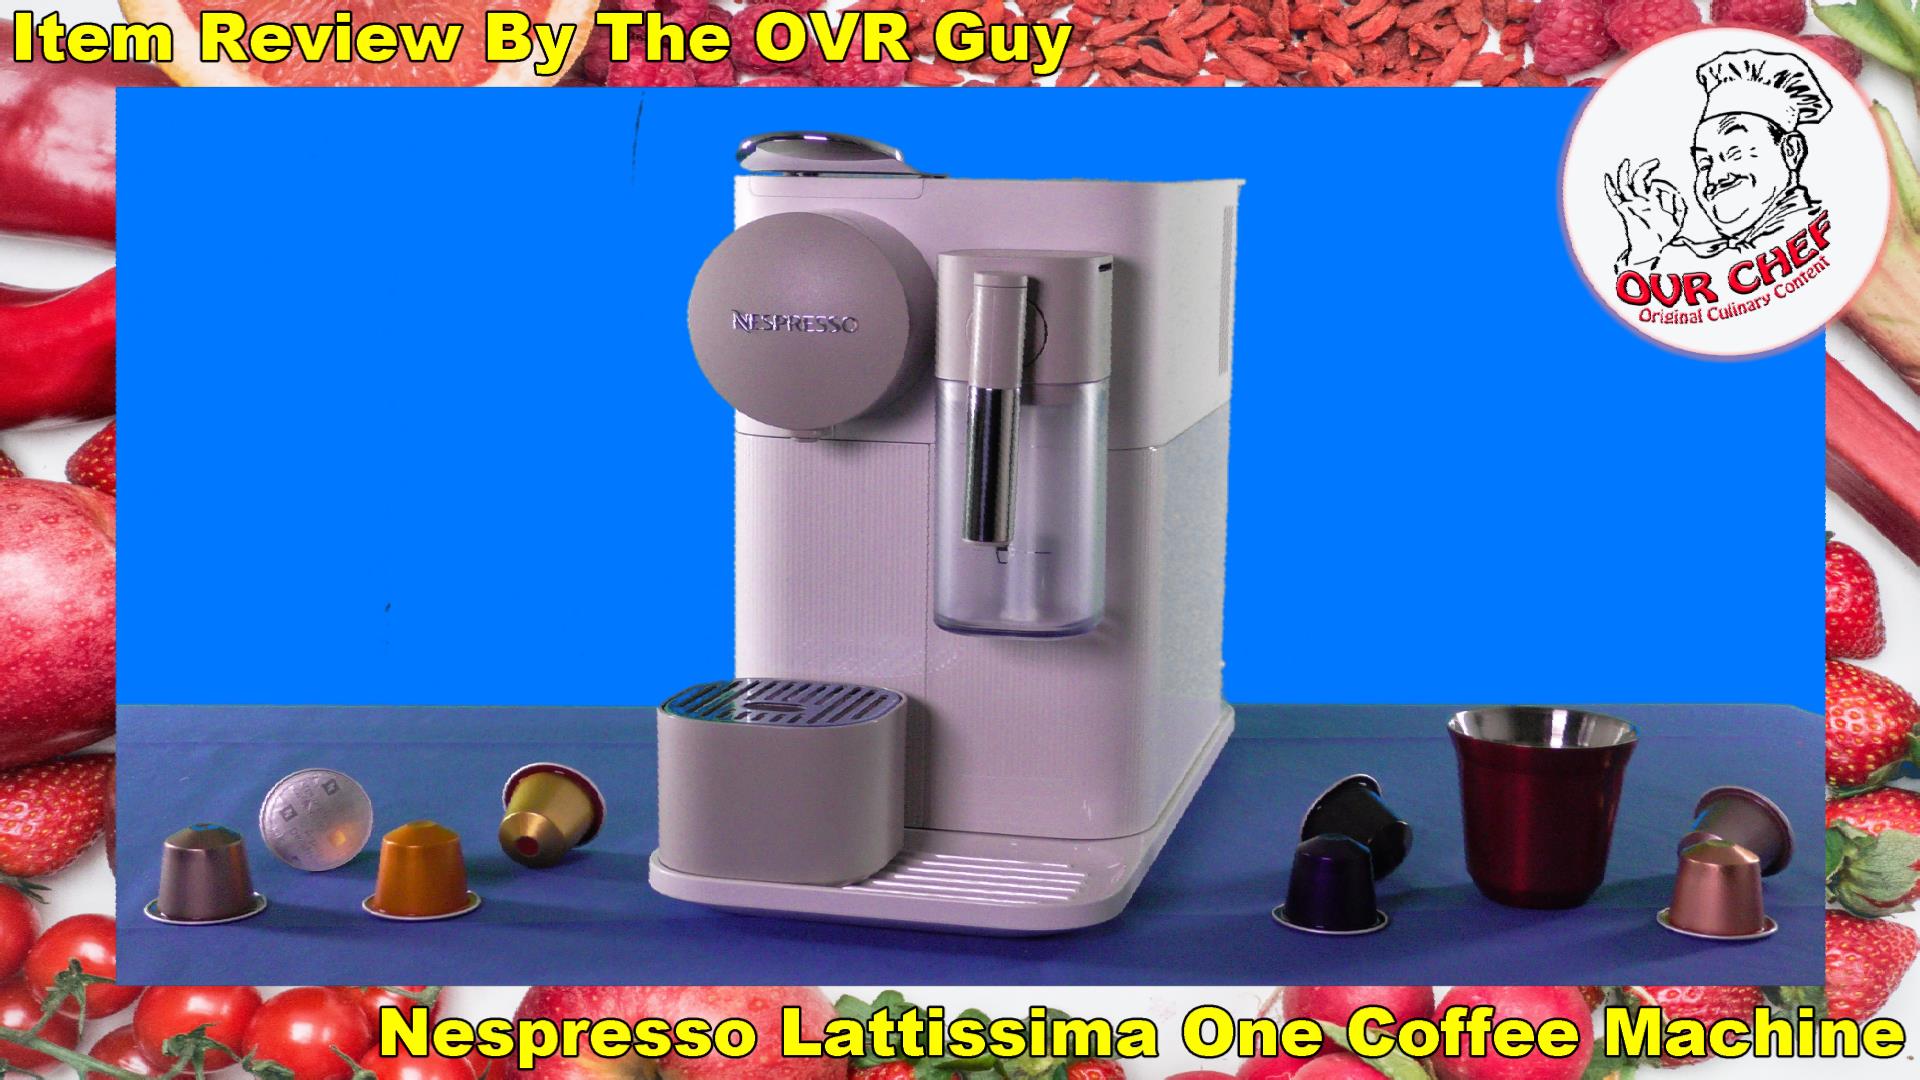 https://www.originalvideoreviews.com/wp-content/uploads/2018/11/Item-review-Nespresso-Lattissima-One-Coffee-Machine-Thumbnail-Text.jpg